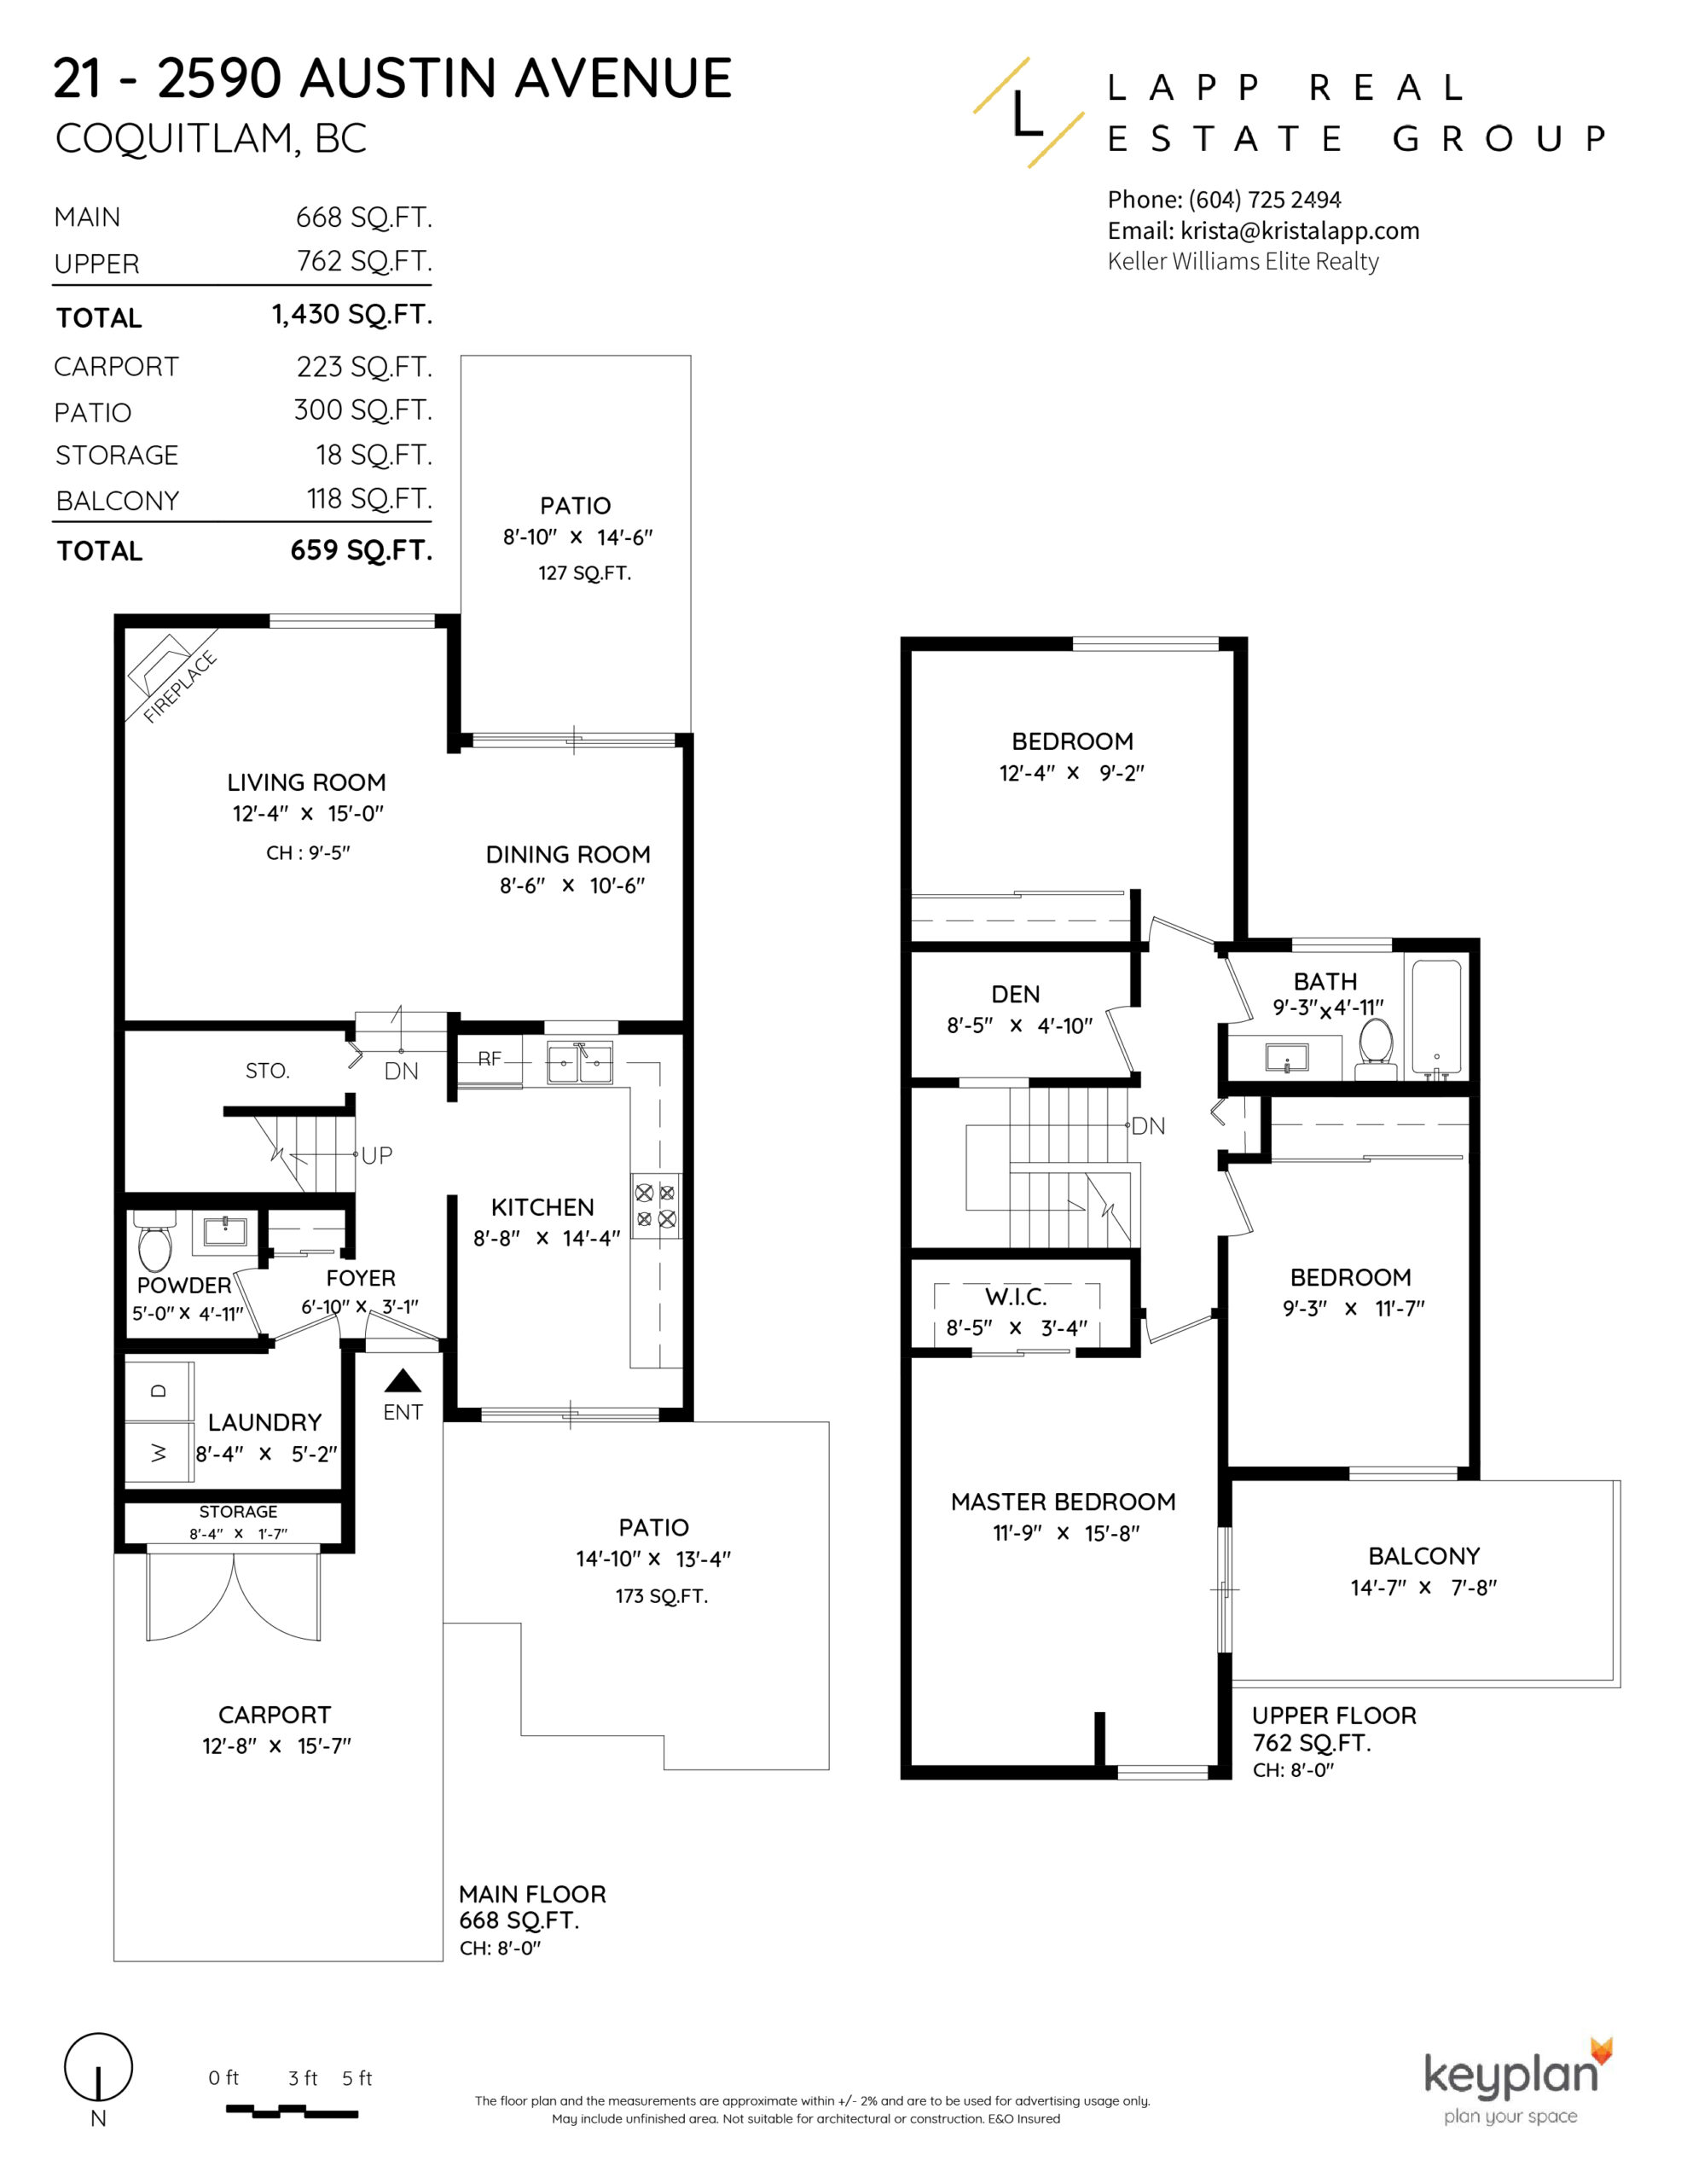 For Top Coquitlam Real Estate Agent Krista Lapp 21 - 2590 Austin Ave Coquitlam-Layout